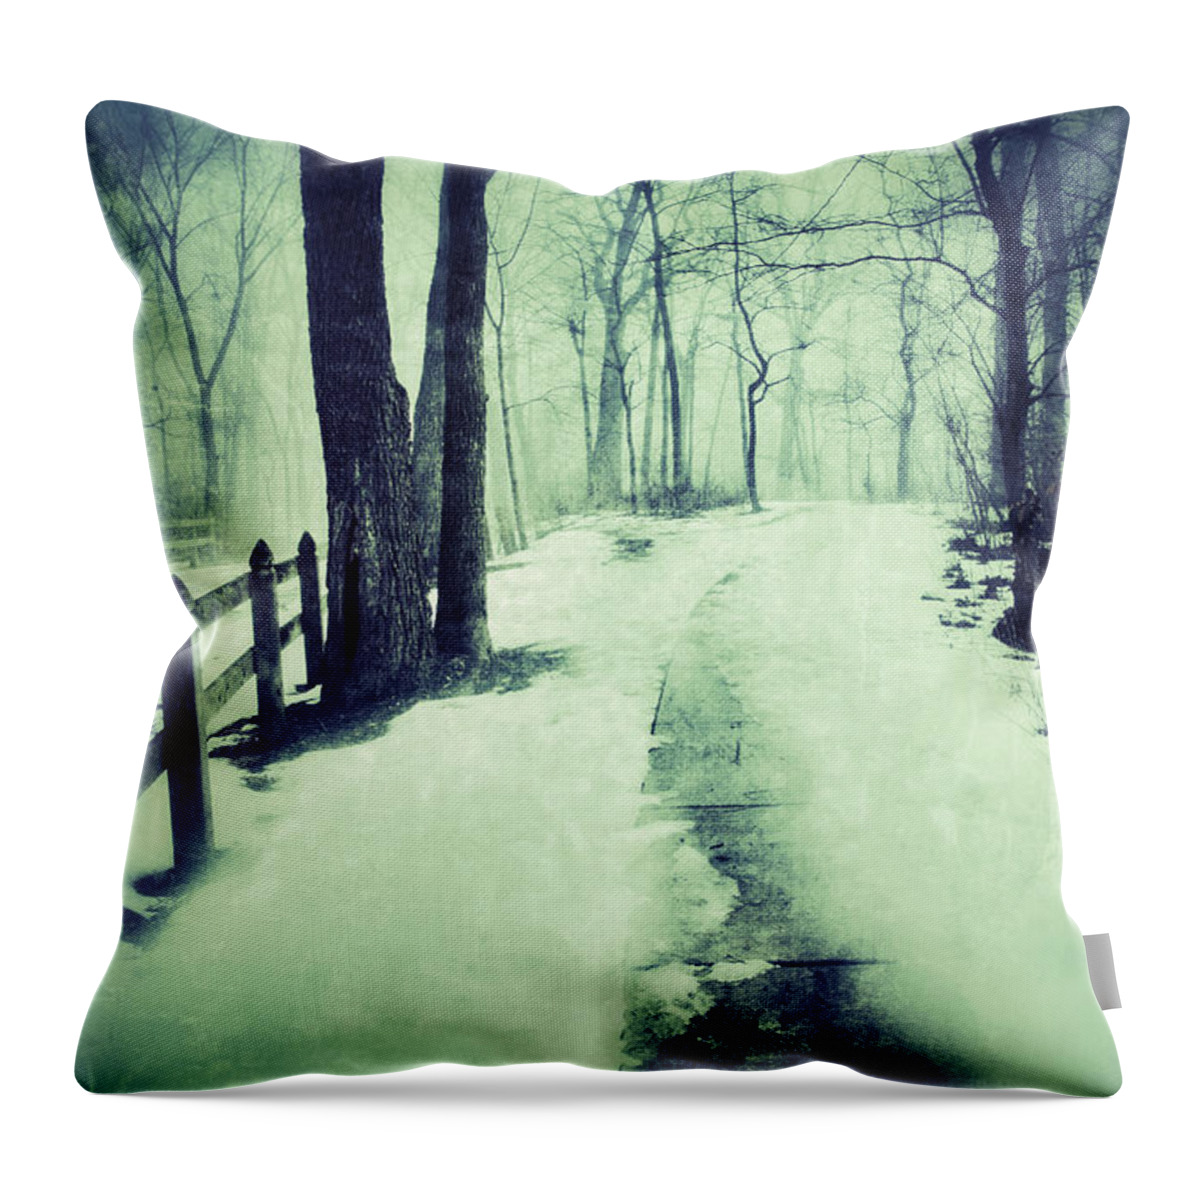 Rural Throw Pillow featuring the photograph Snowy Wooded Path by Jill Battaglia